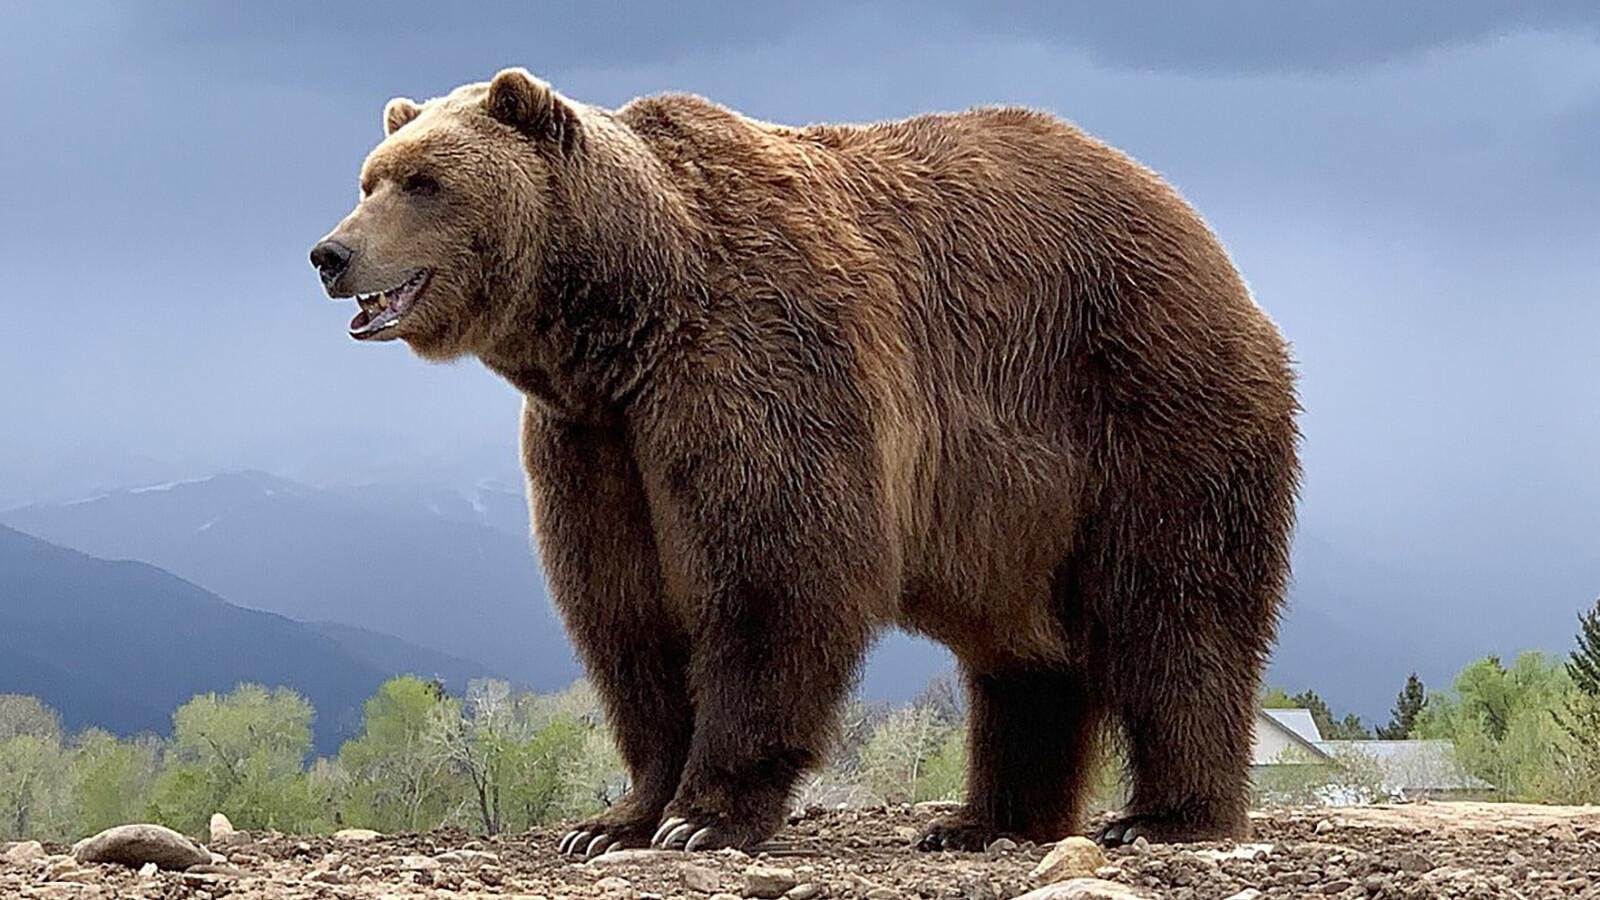 Bears 2 shop. Северная Америка медведь Гризли. Американский медведь Гризли. Медведь грызли американский. Бурый медведь Гризли в Северной Америке.